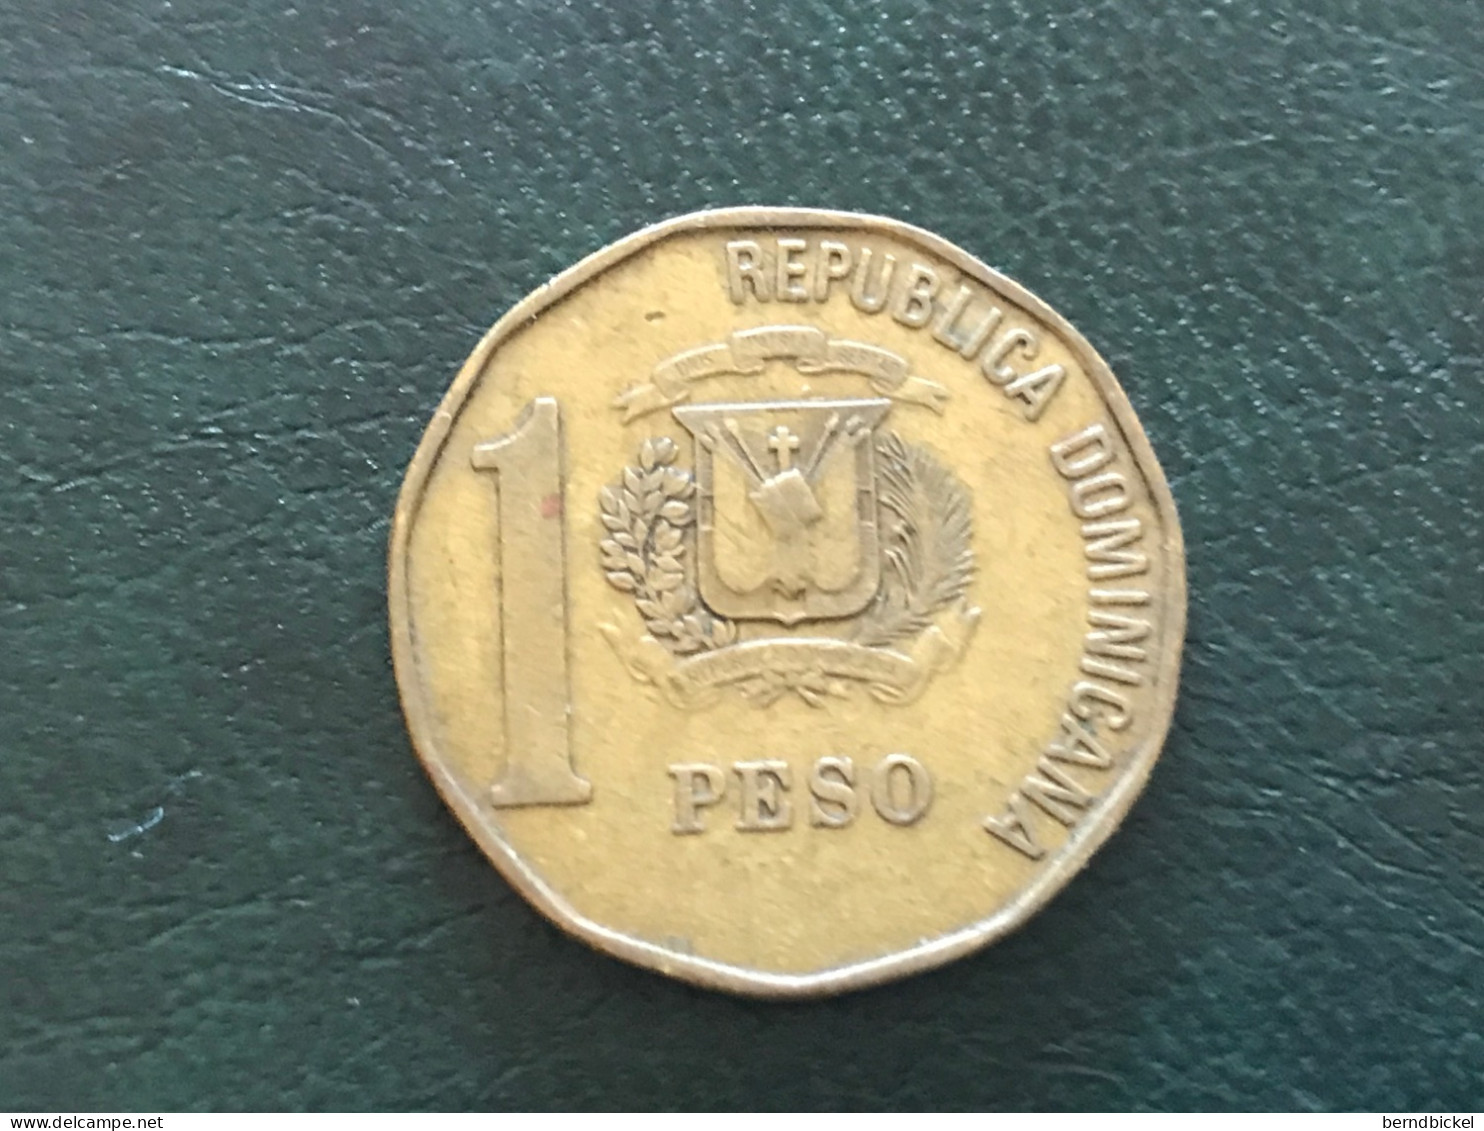 Münze Münzen Umlaufmünze Dominikanische Republik 1 Peso 1991 - Dominicaine